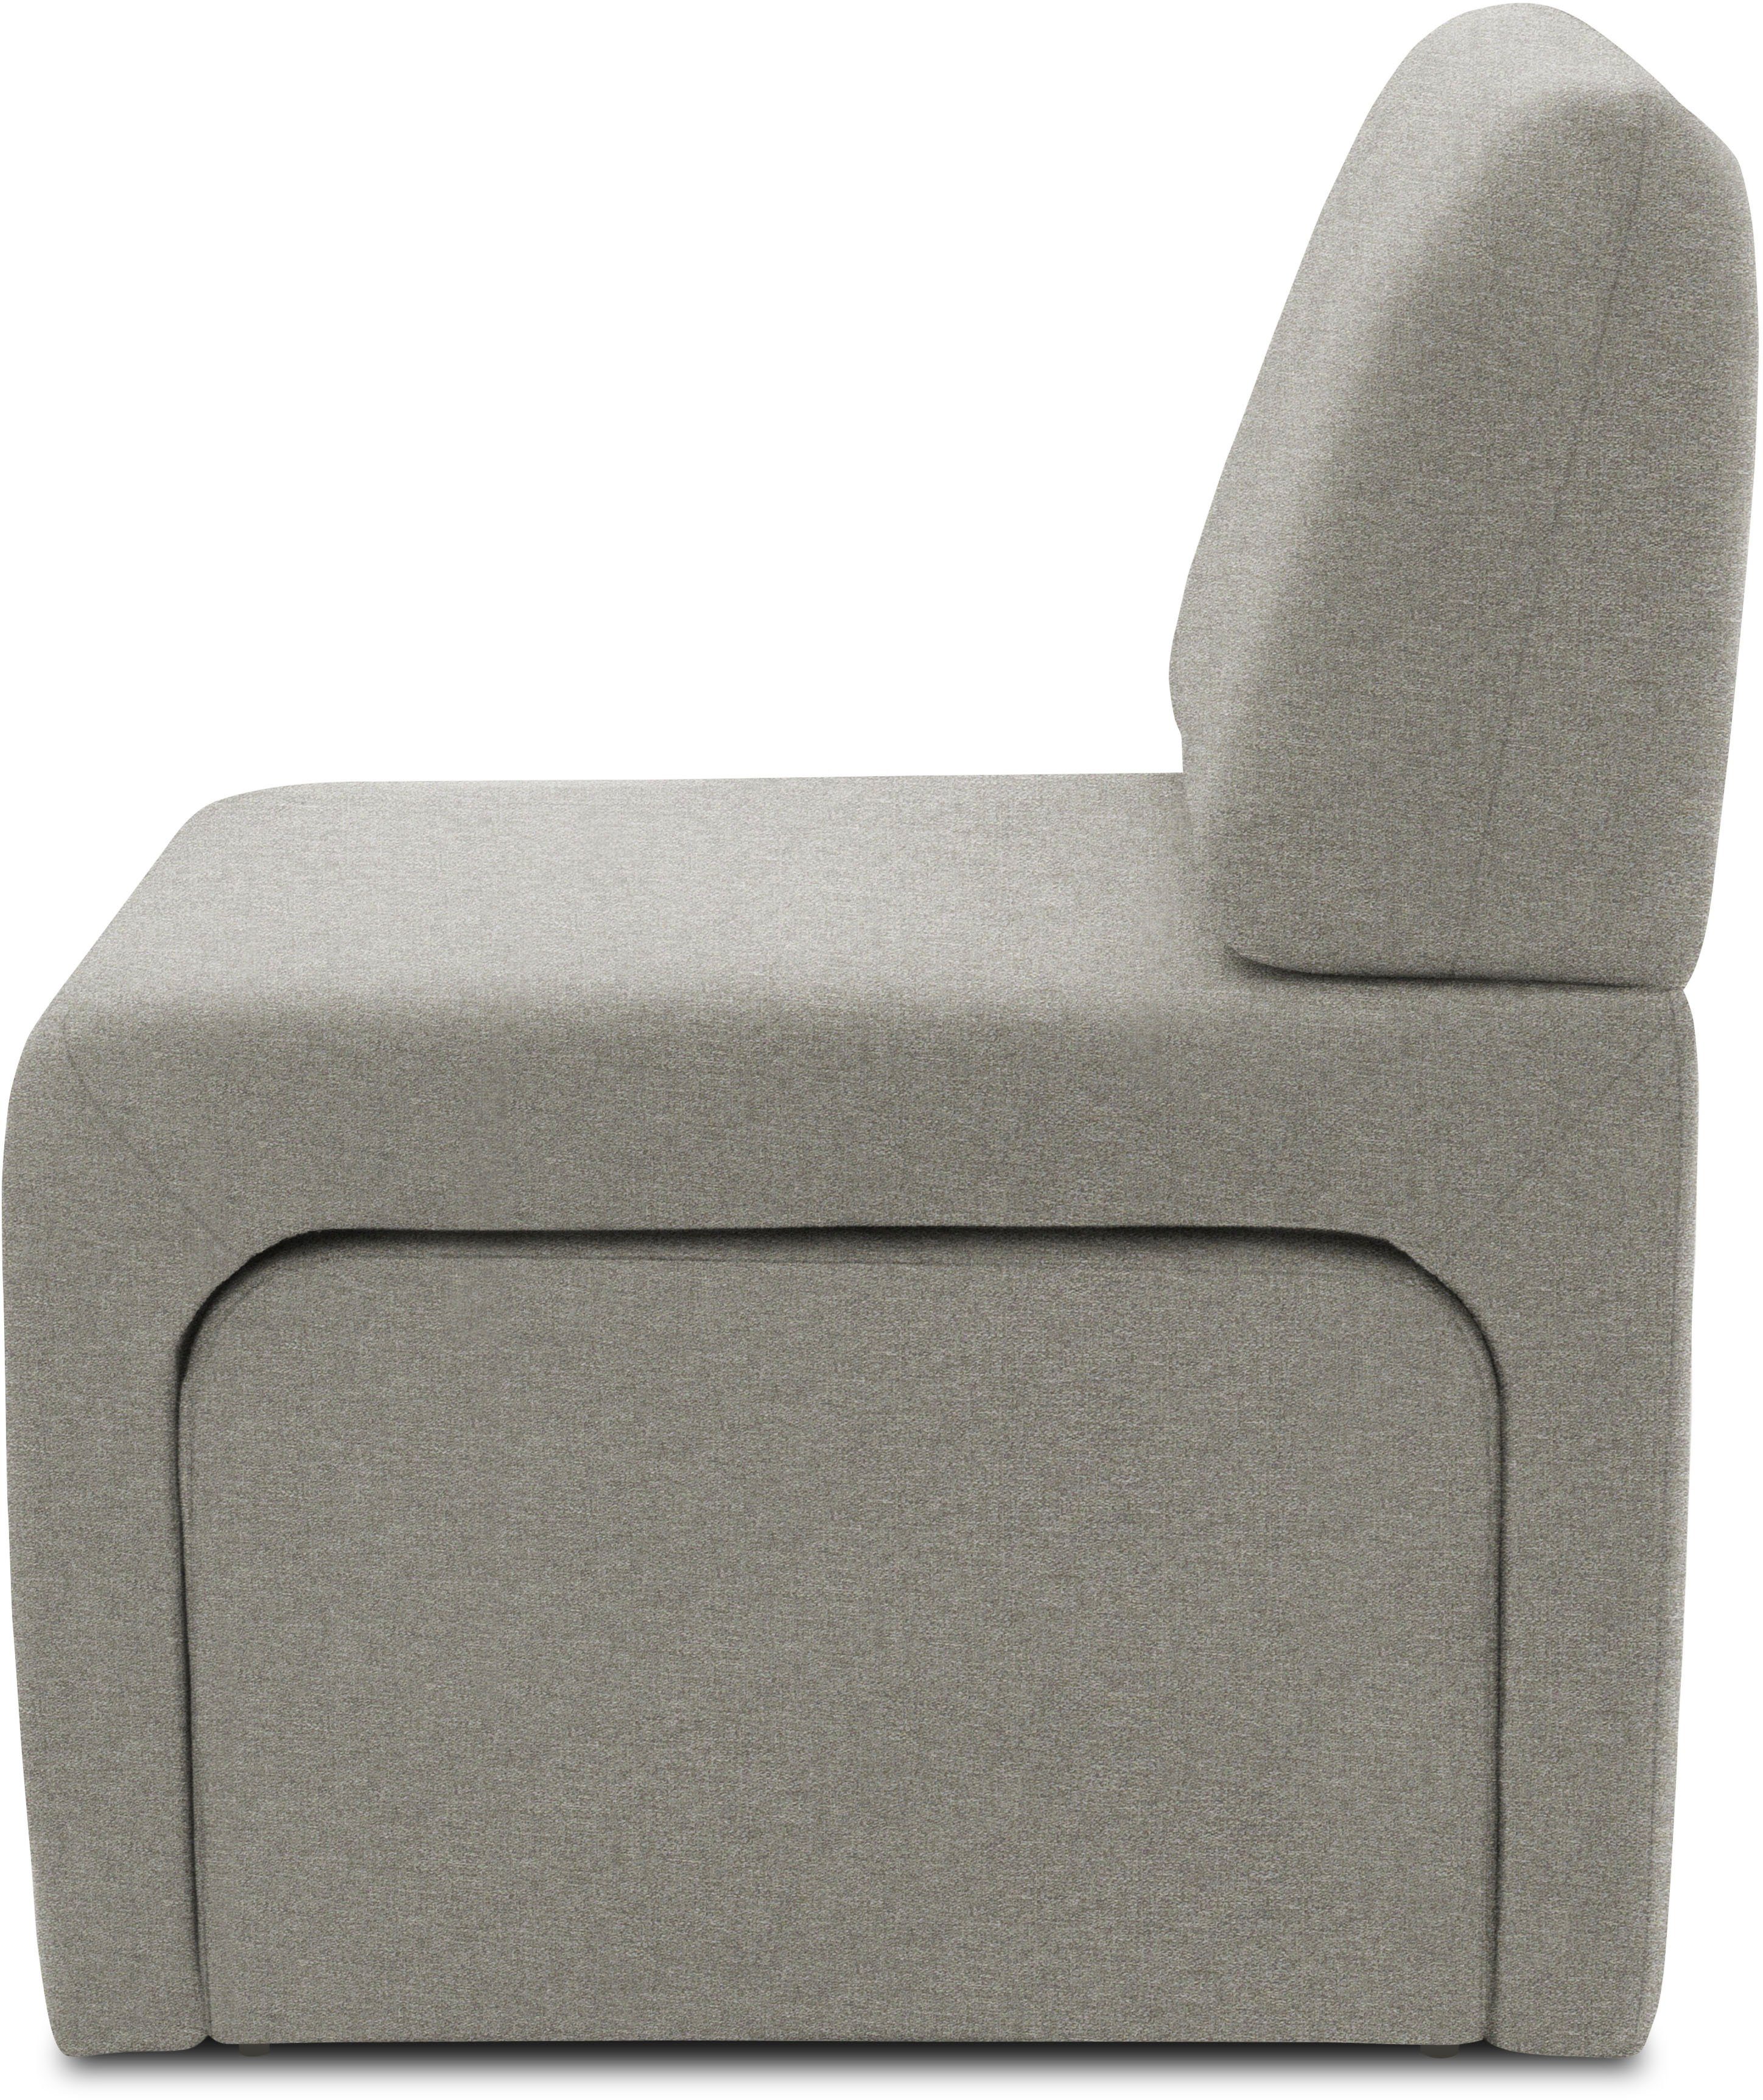 DOMO collection Sessel 700017, dem unter Hocker verstaubar Sessel